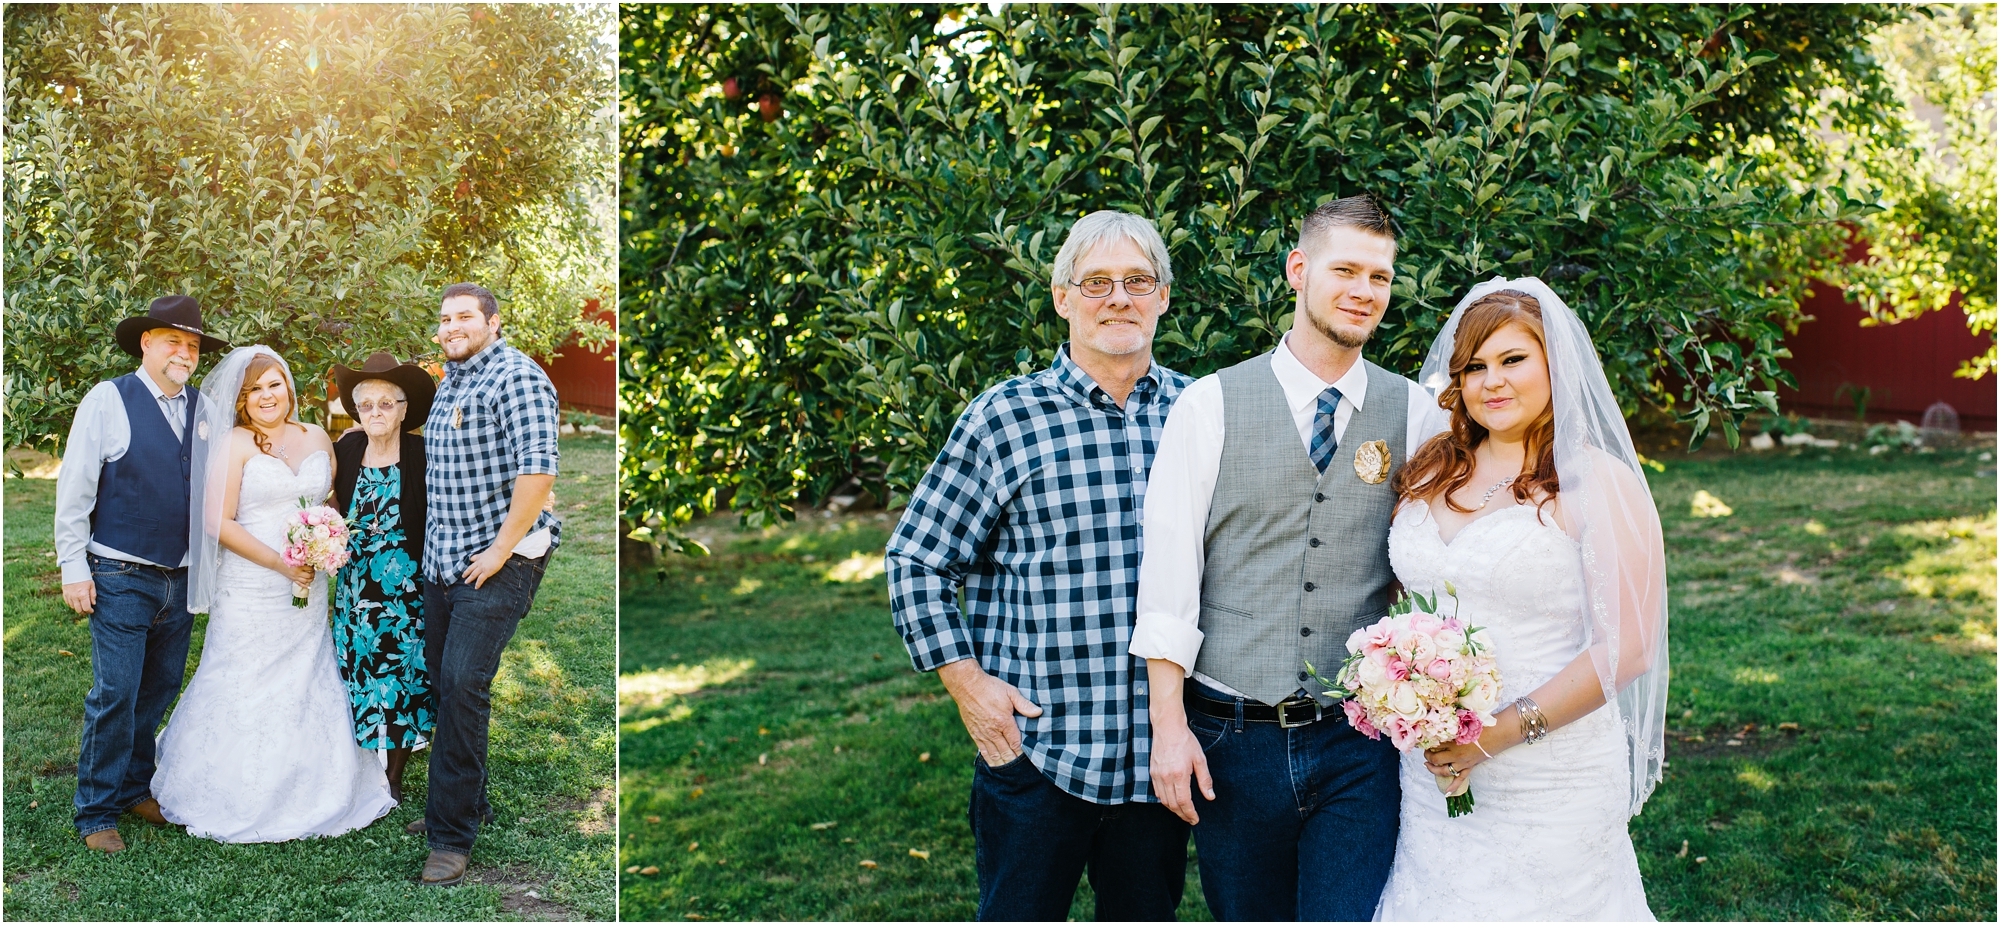 Oak Glen Apple Farm Wedding - https://brittneyhannonphotography.com